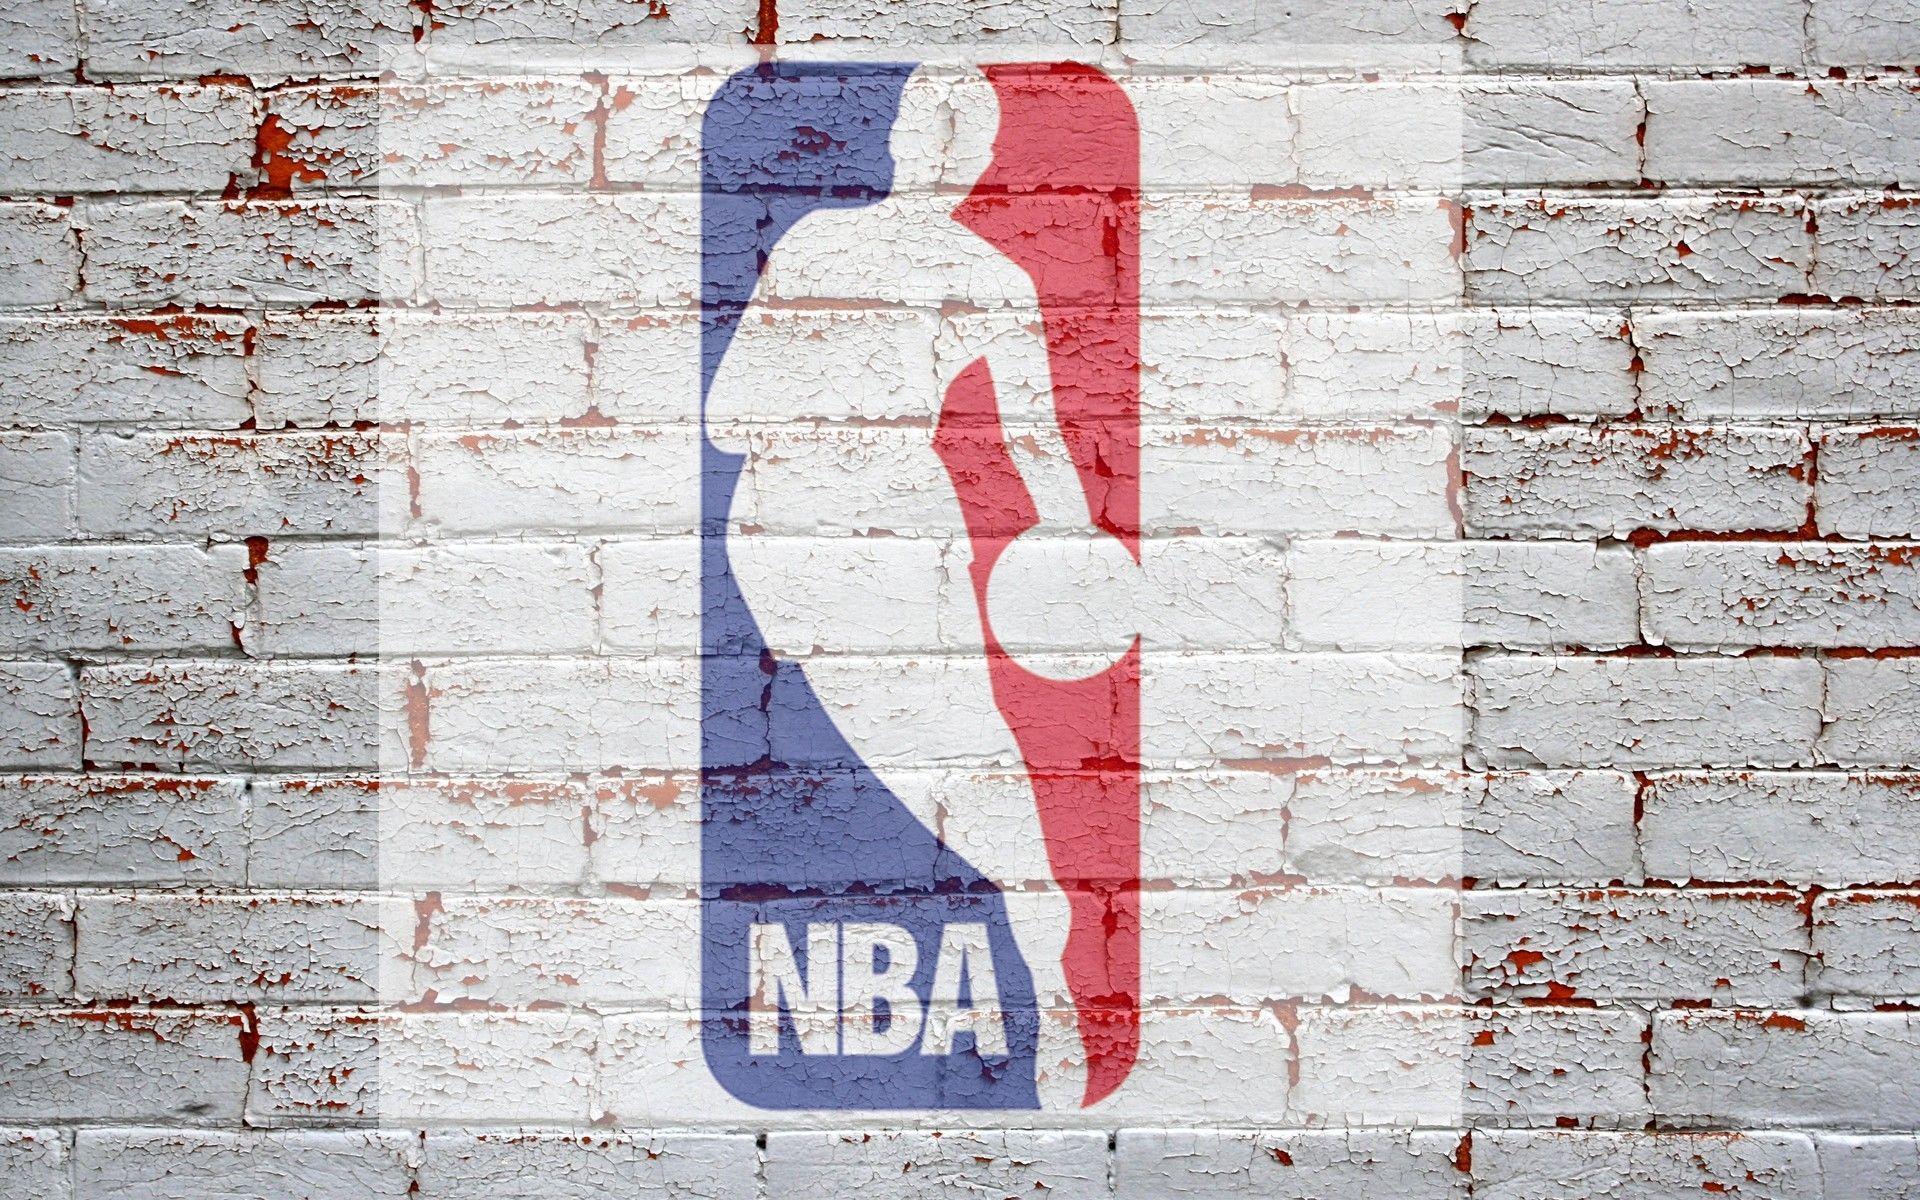 NBA Logos Wallpapers - Wallpaper Cave